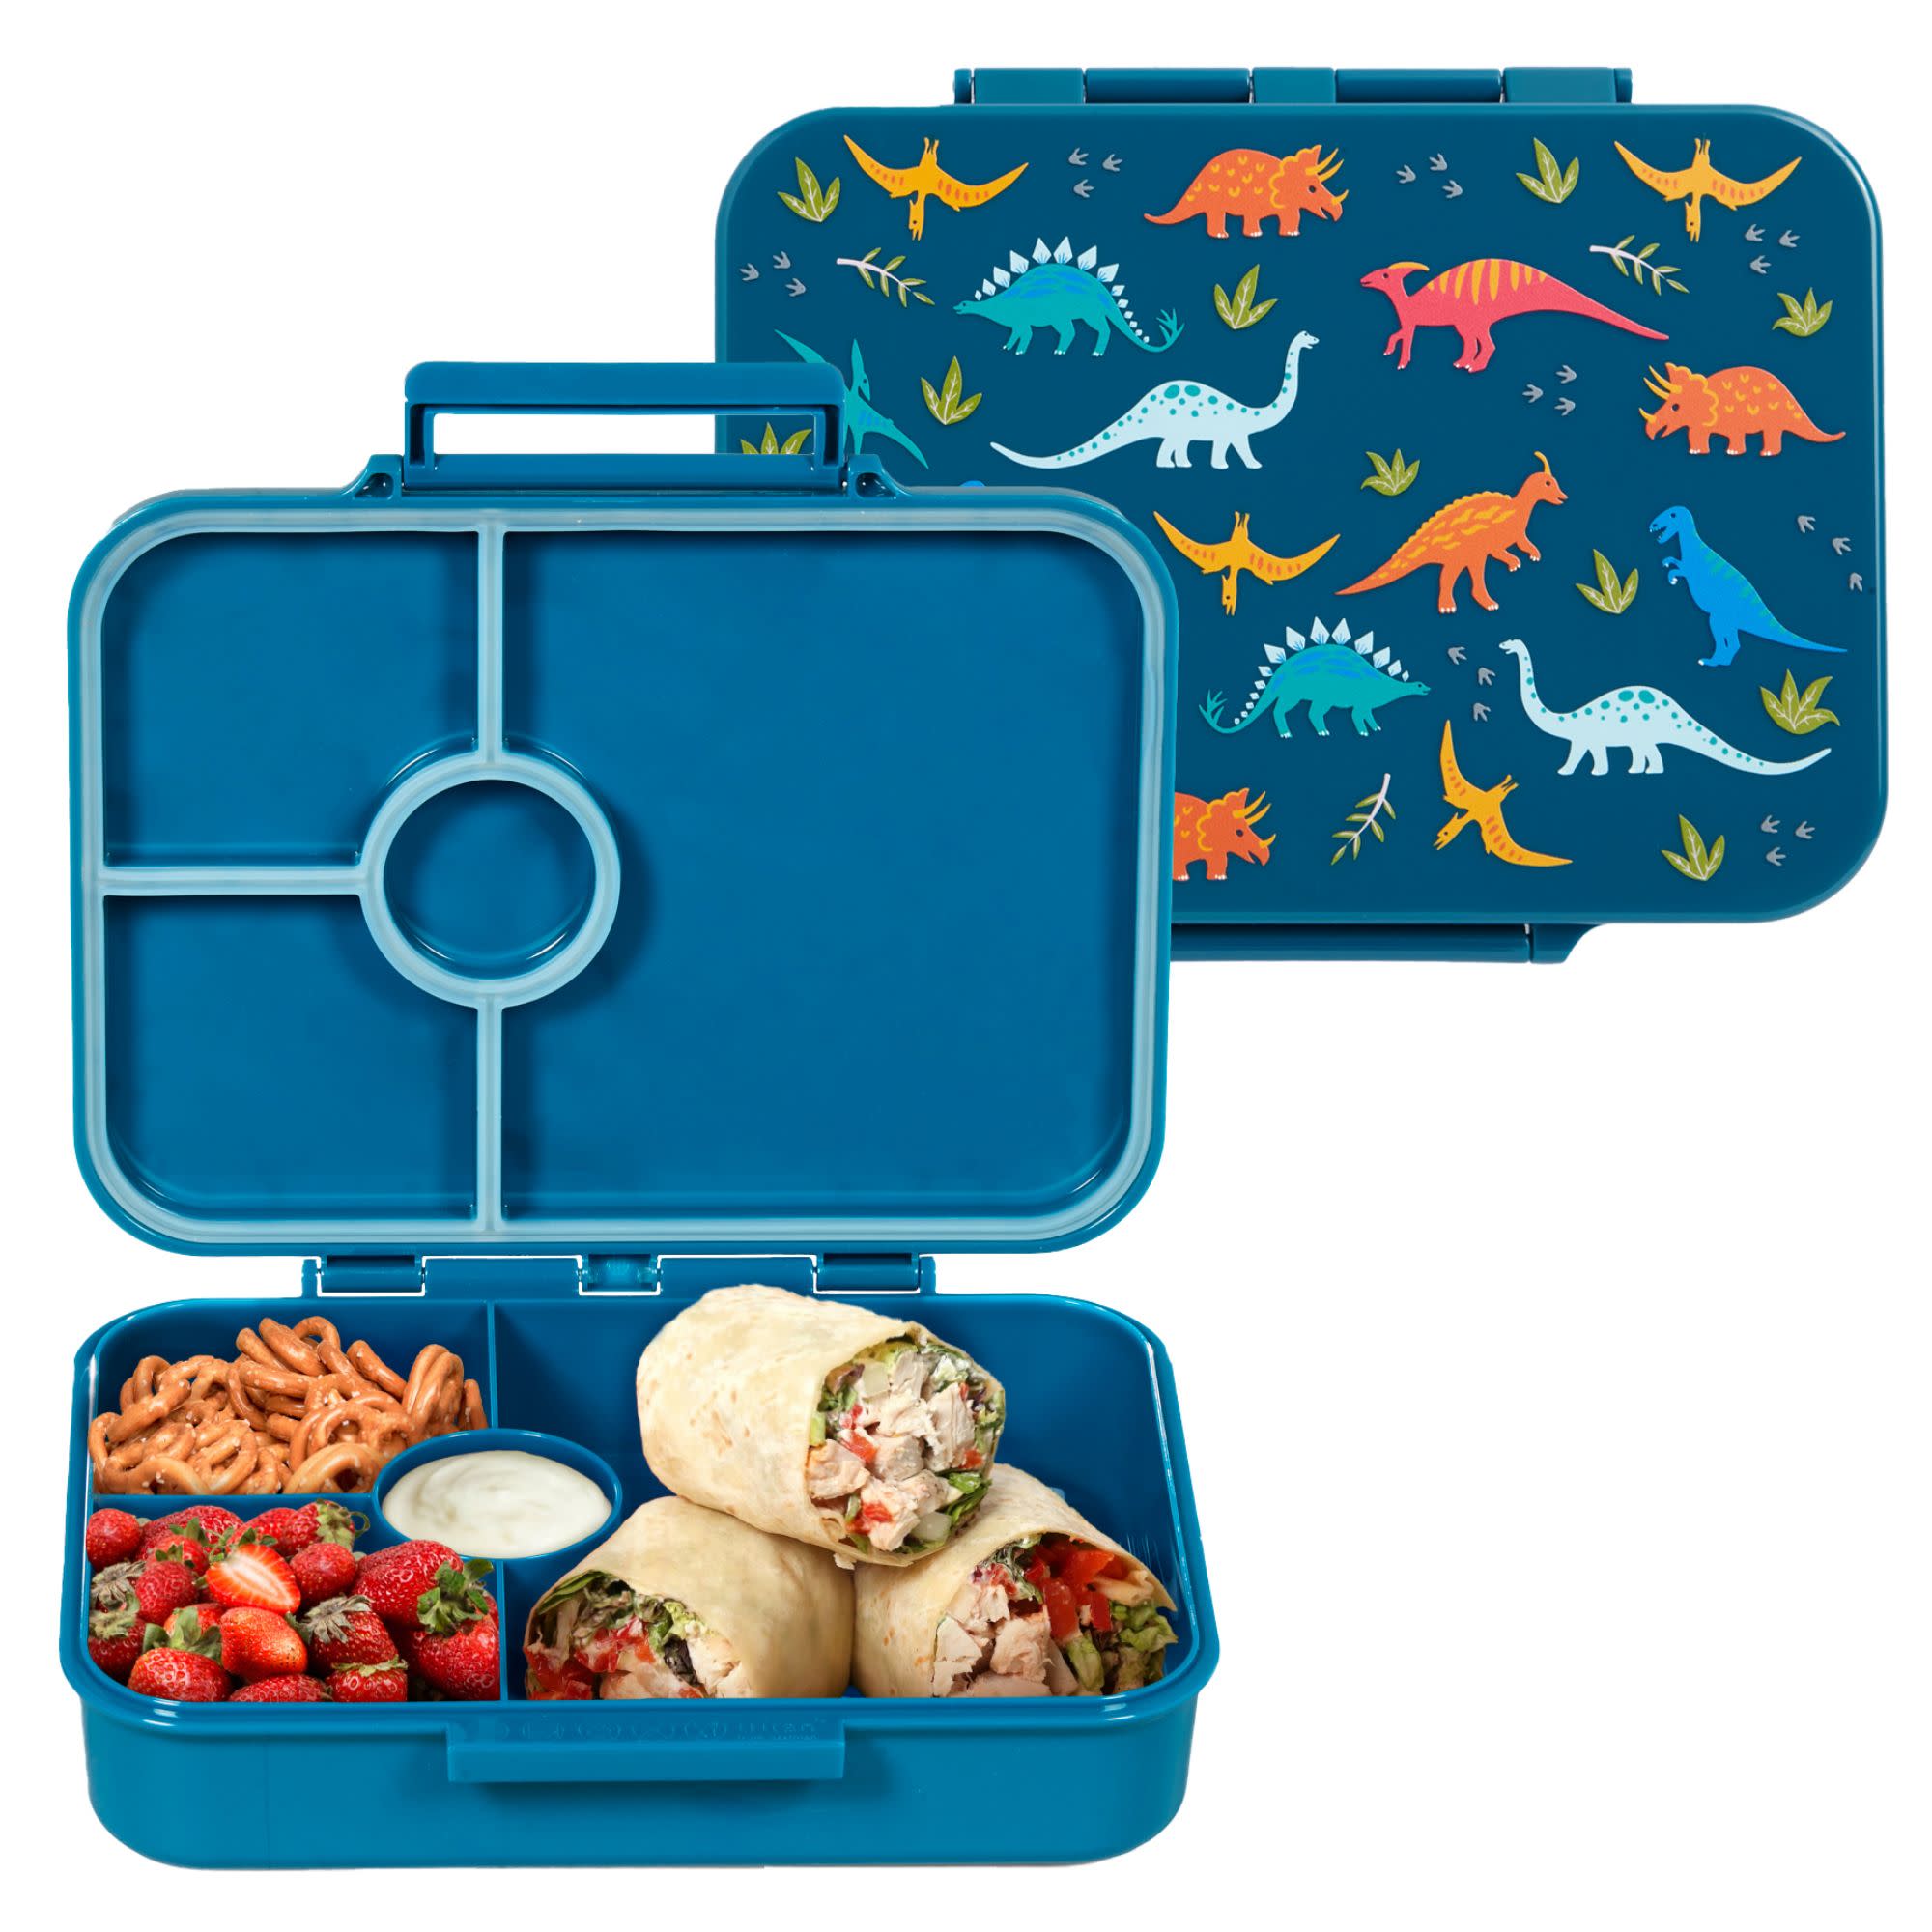 Jurassic Dinosaurs Lunch Box